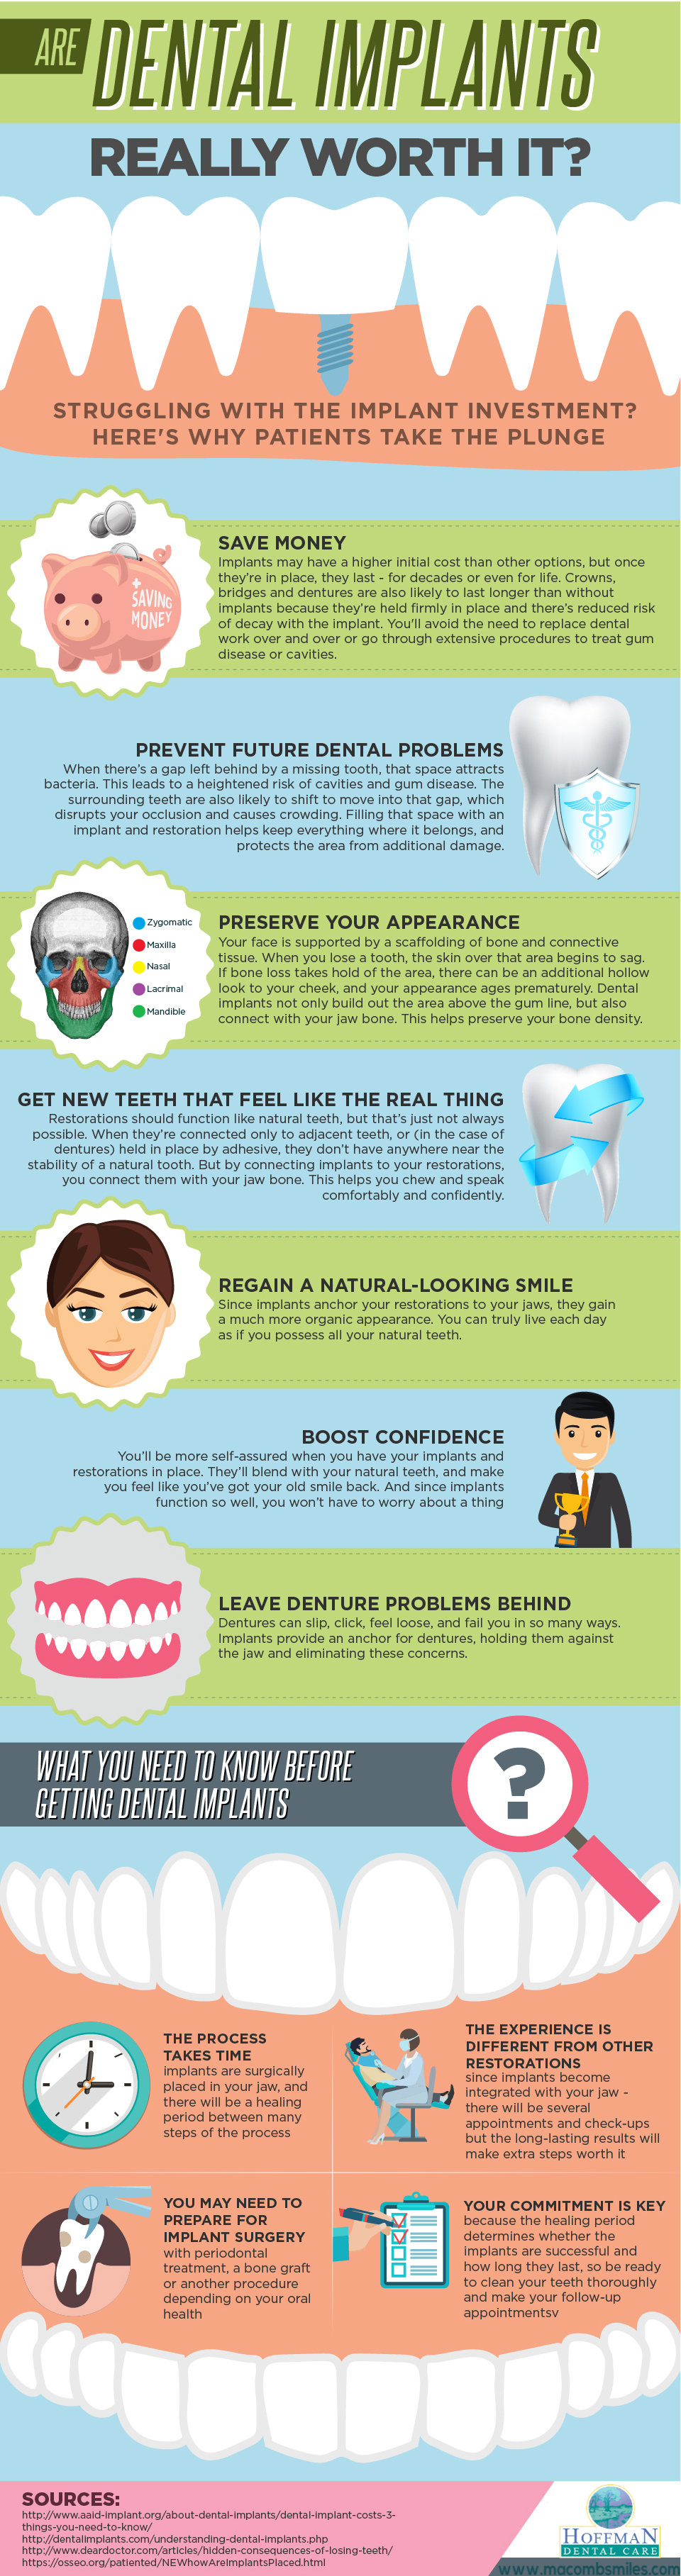 Macomb dental implants infographic